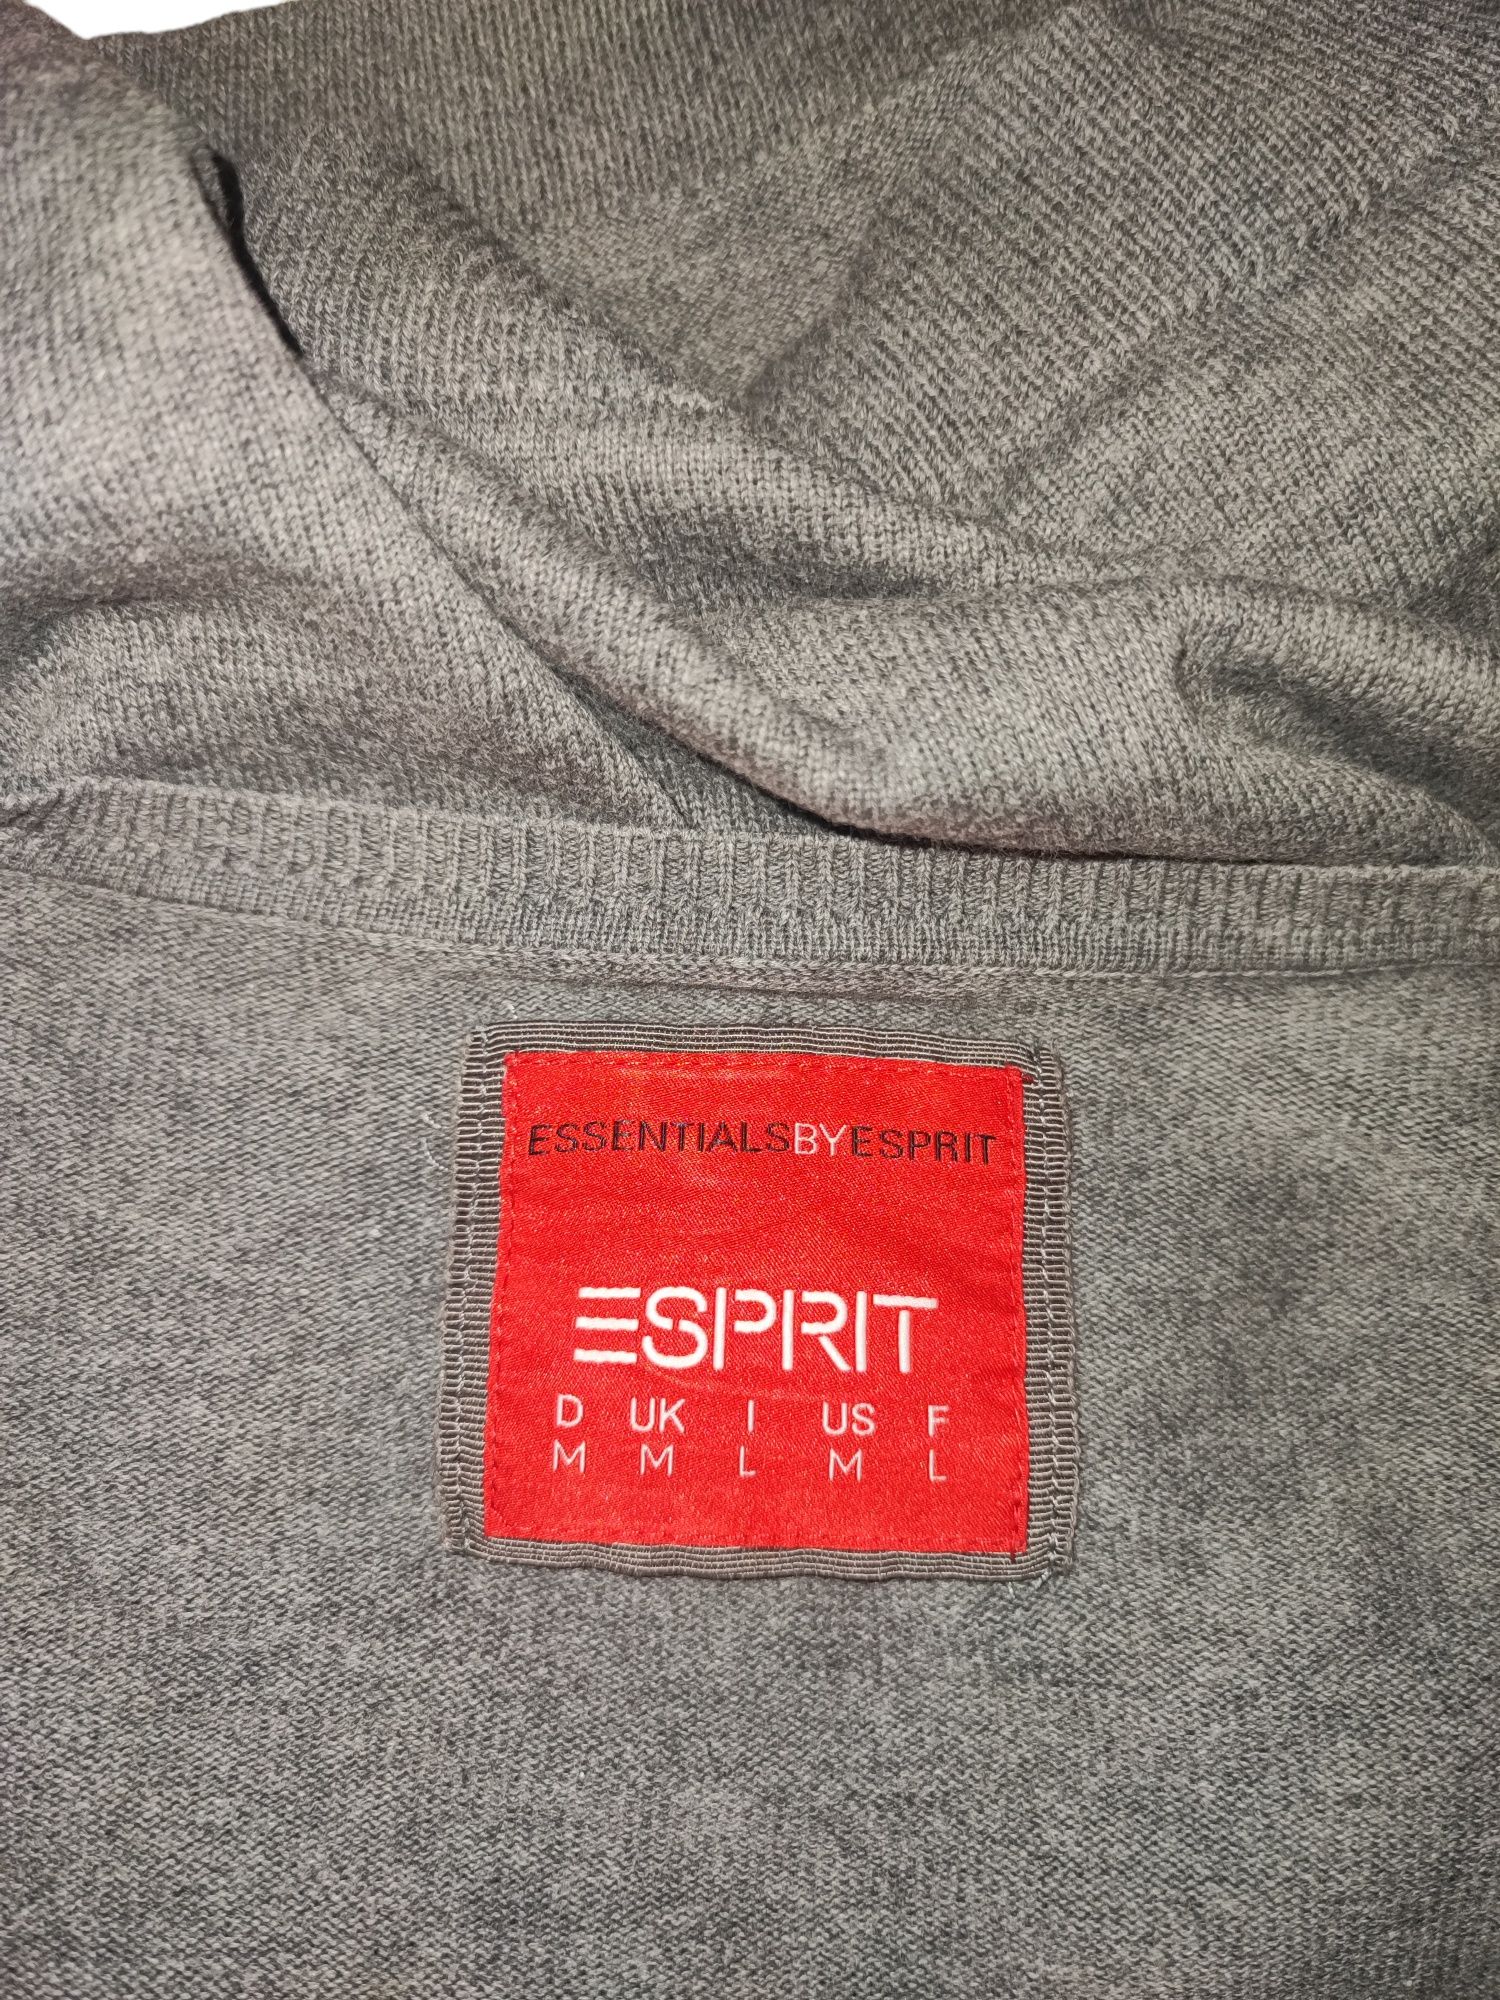 3441. Esprit szary sweter 38 M